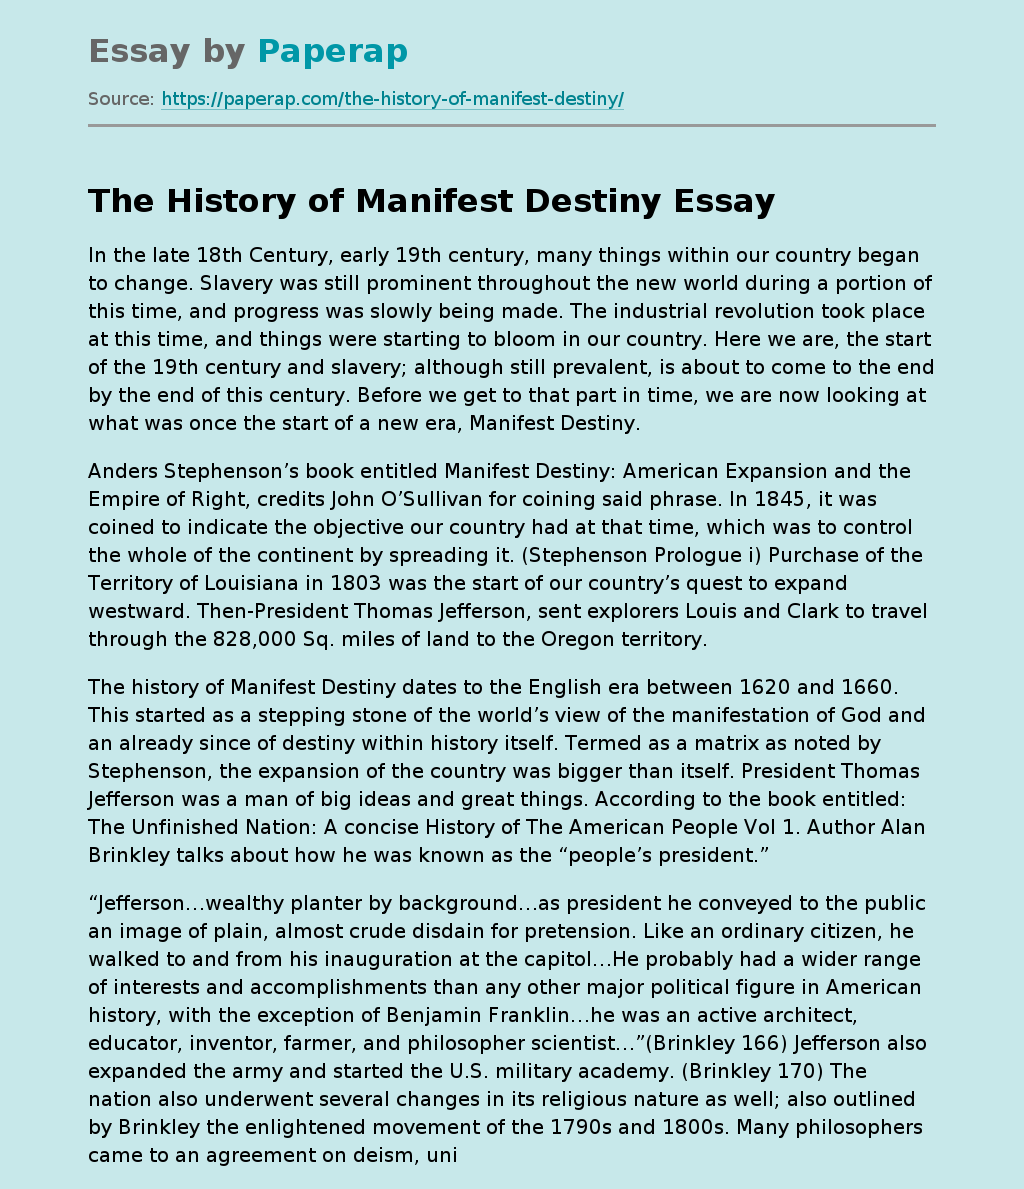 The History of Manifest Destiny